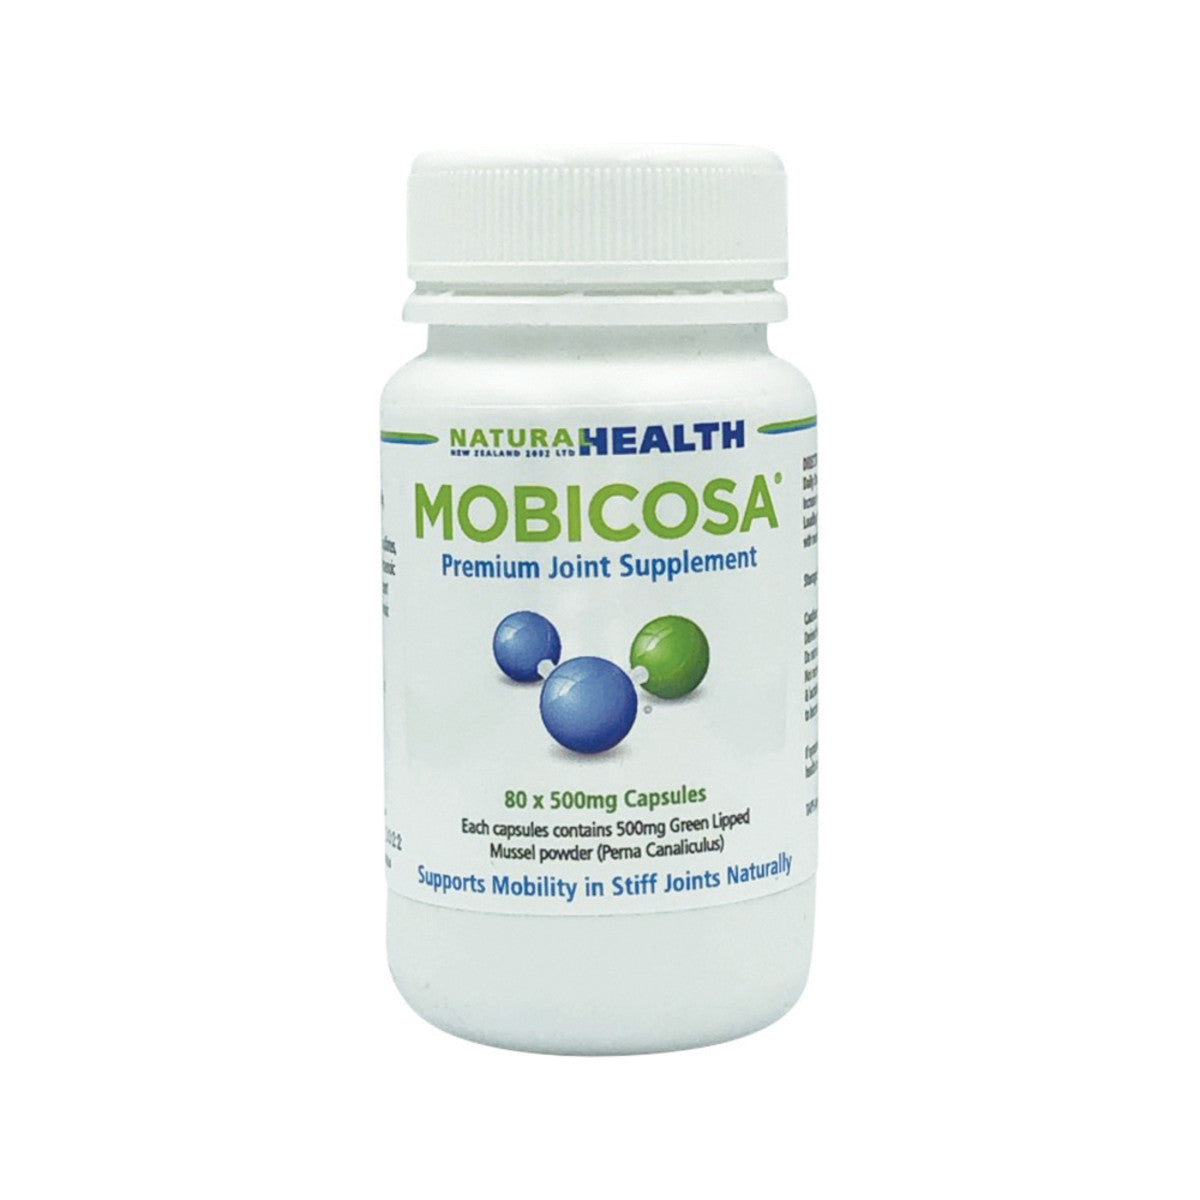 NATURAL HEALTH Mobicosa (Premium Joint Supplement) 80c